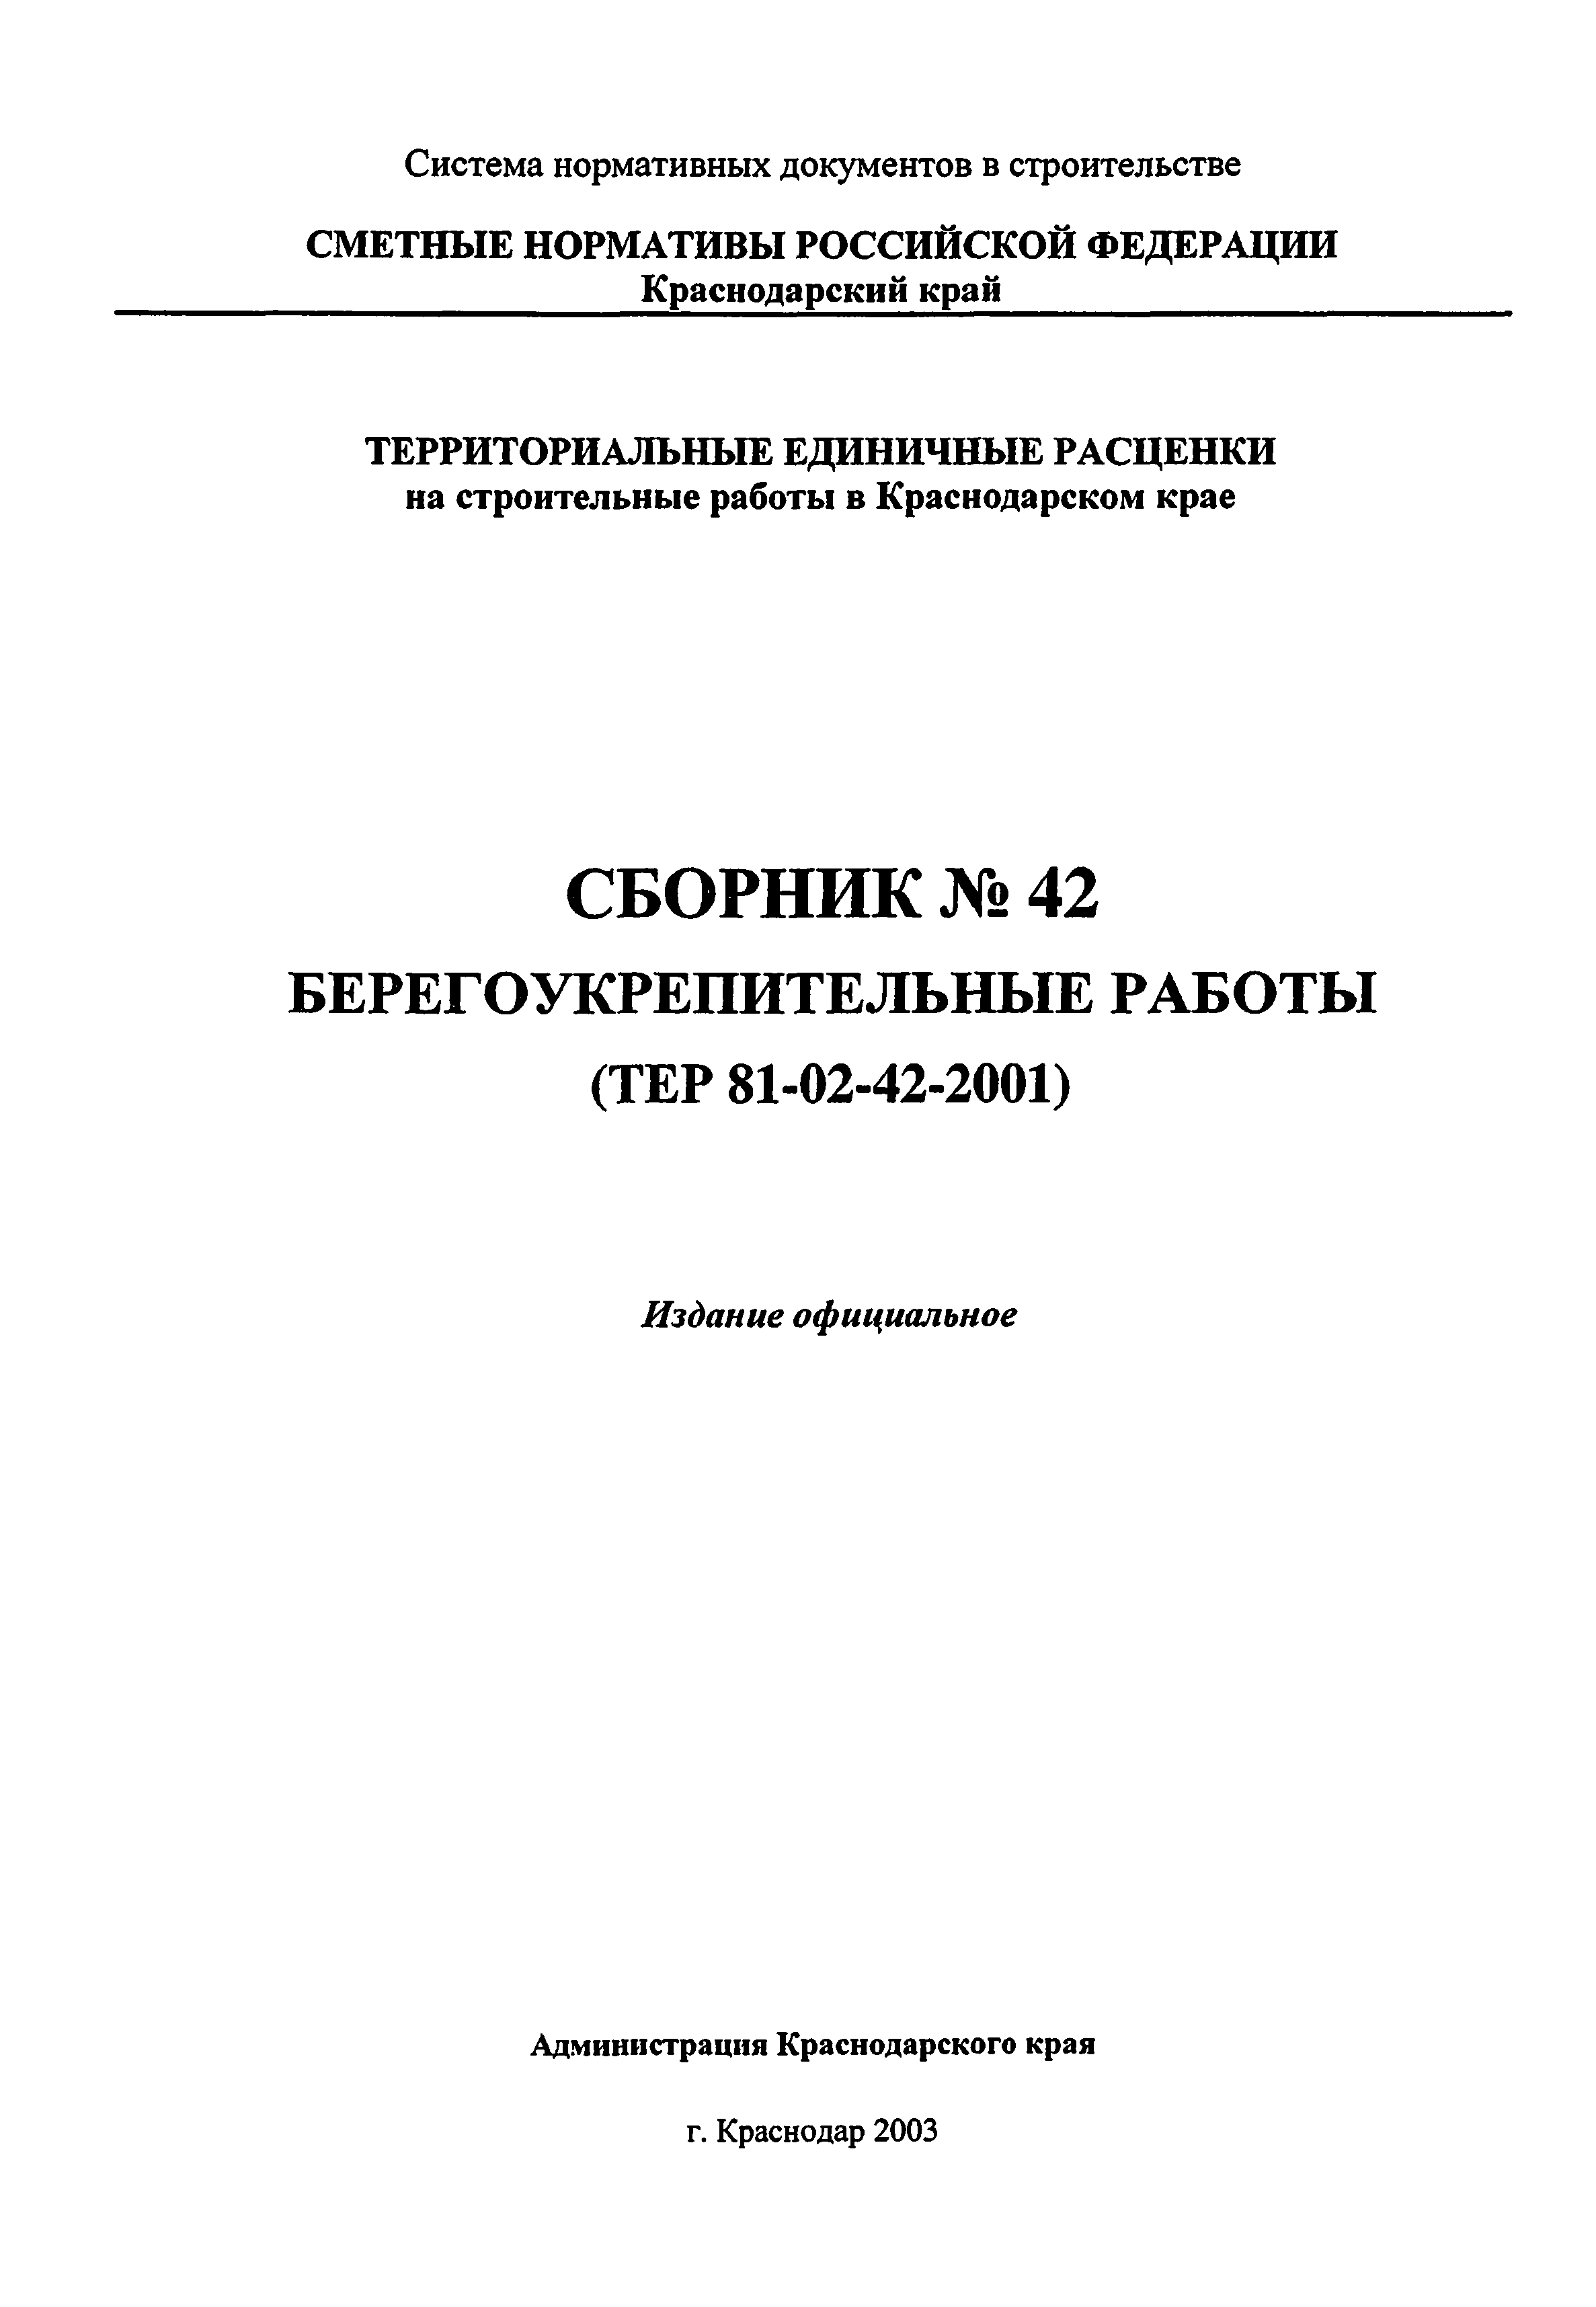 ТЕР Краснодарского края 2001-42